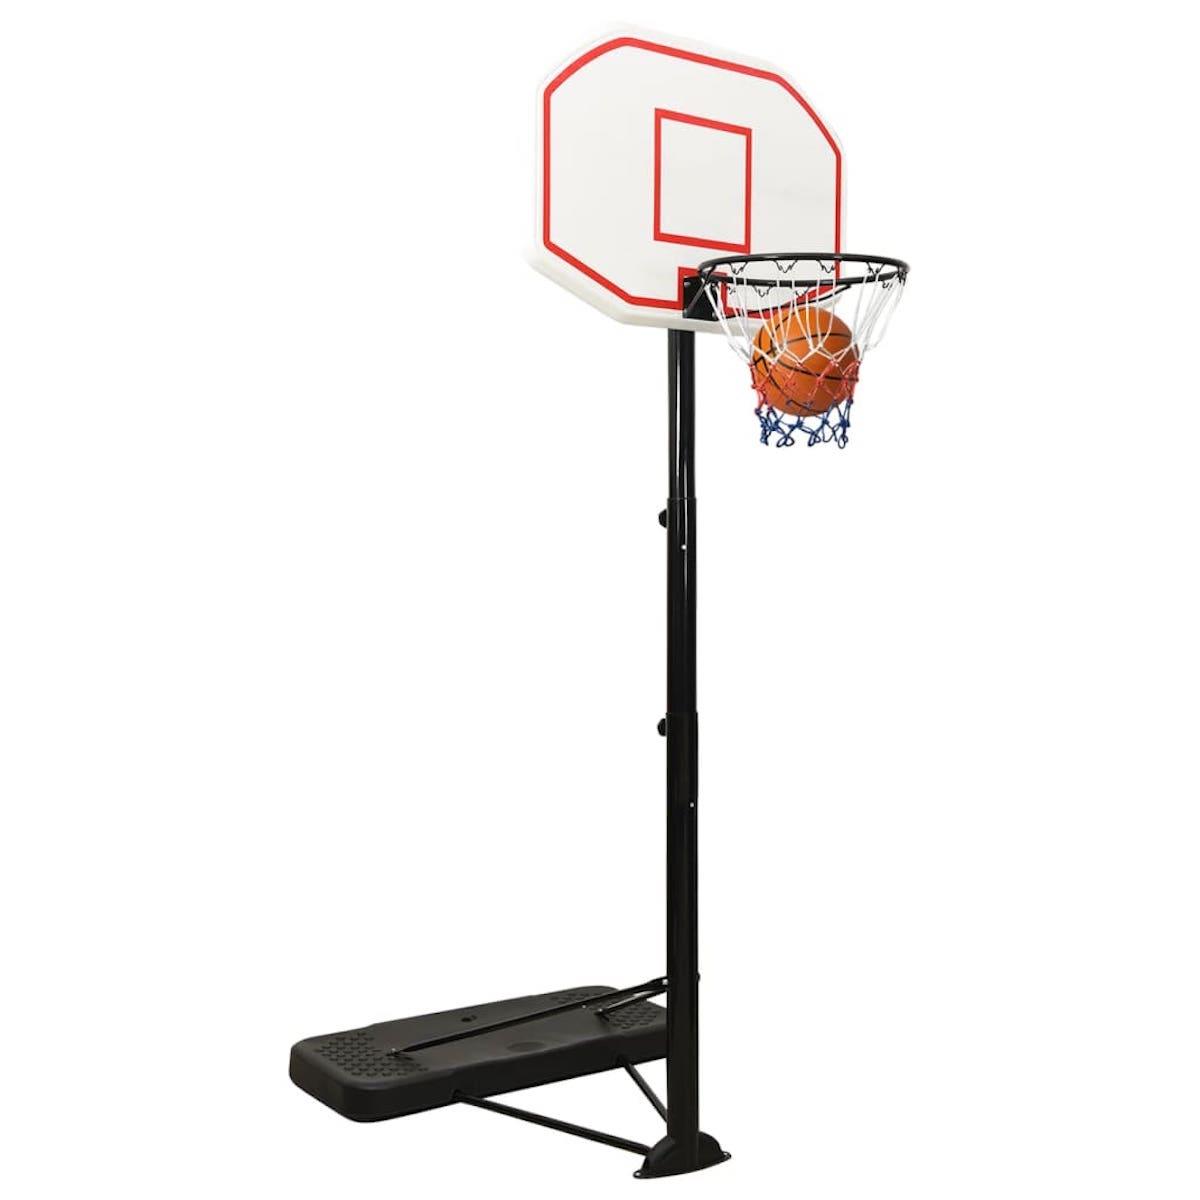 Basketkorg med stativ 258-363 cm